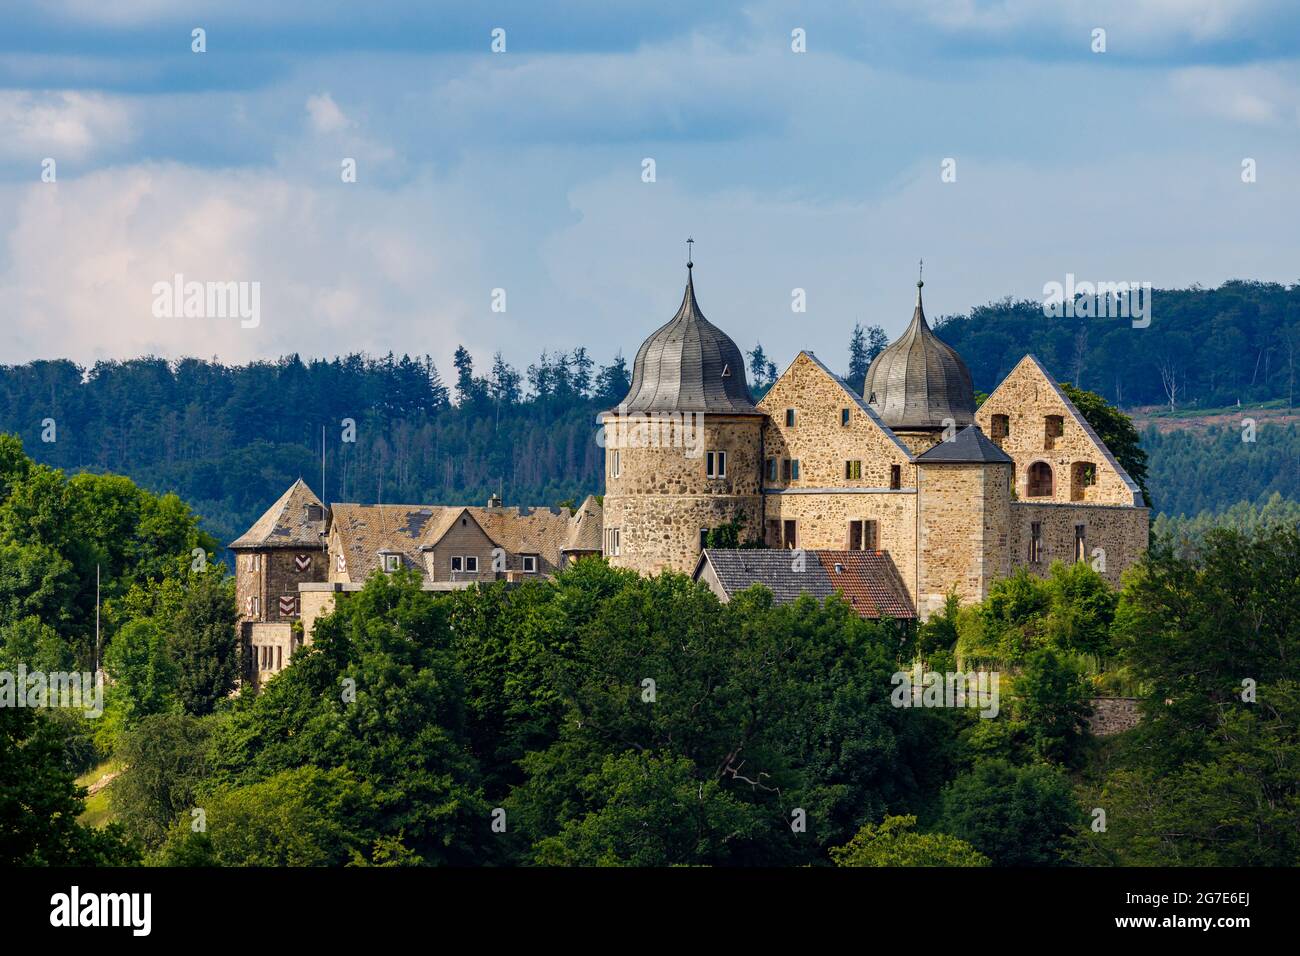 The castle of the sleeping beauty Dornröschen Sababurg at Hofgeismar in Hesse Stock Photo